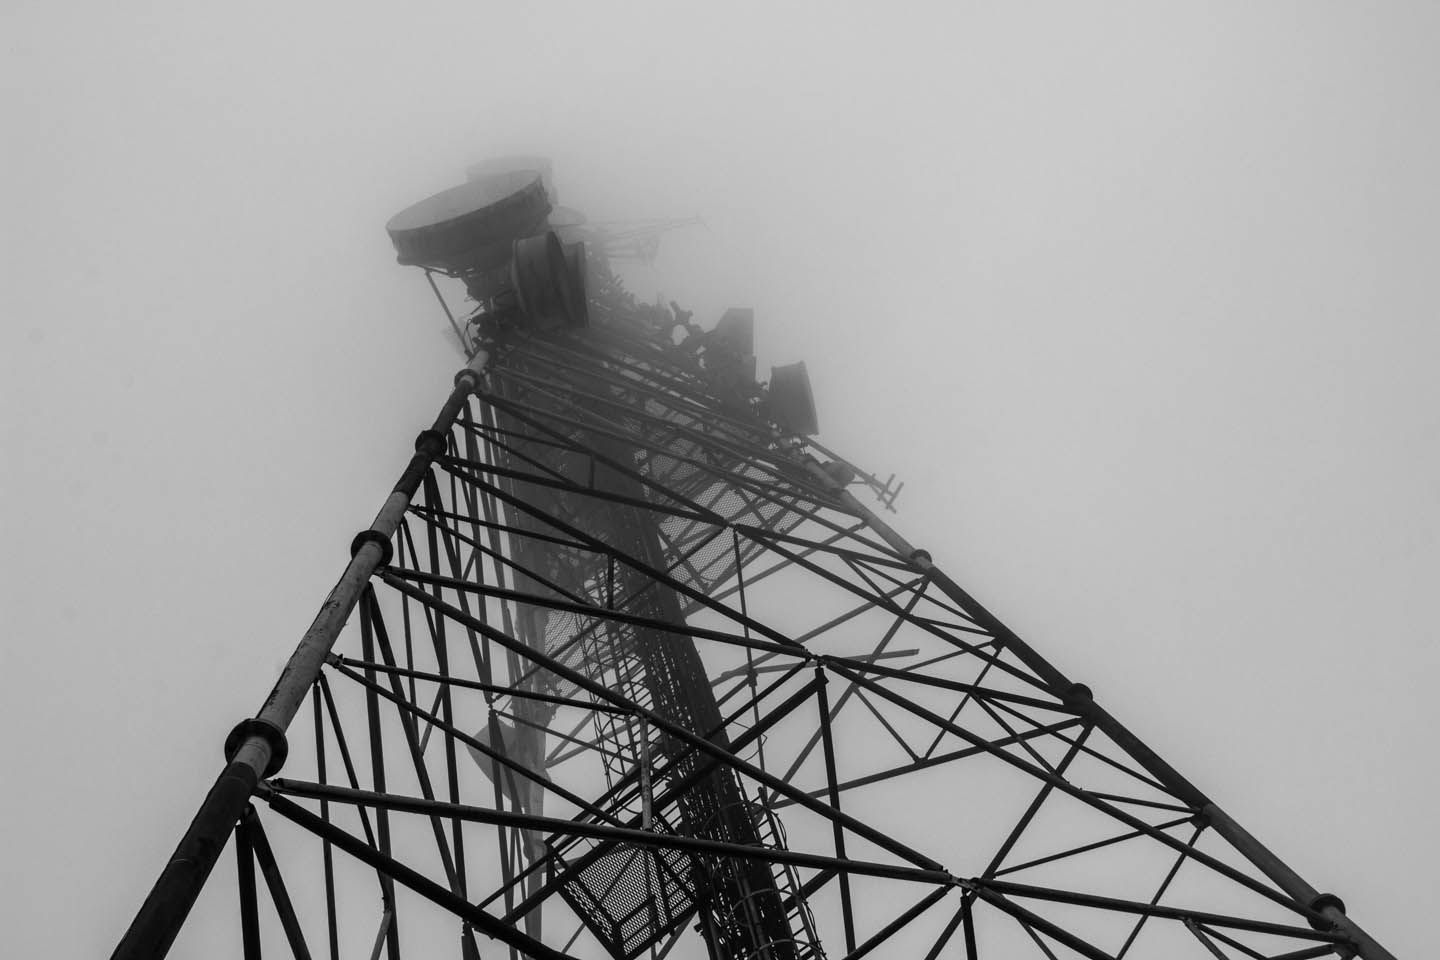 Communication tower covered by fog at Gunung Brinchang, Cameron Highlands, Malaysia